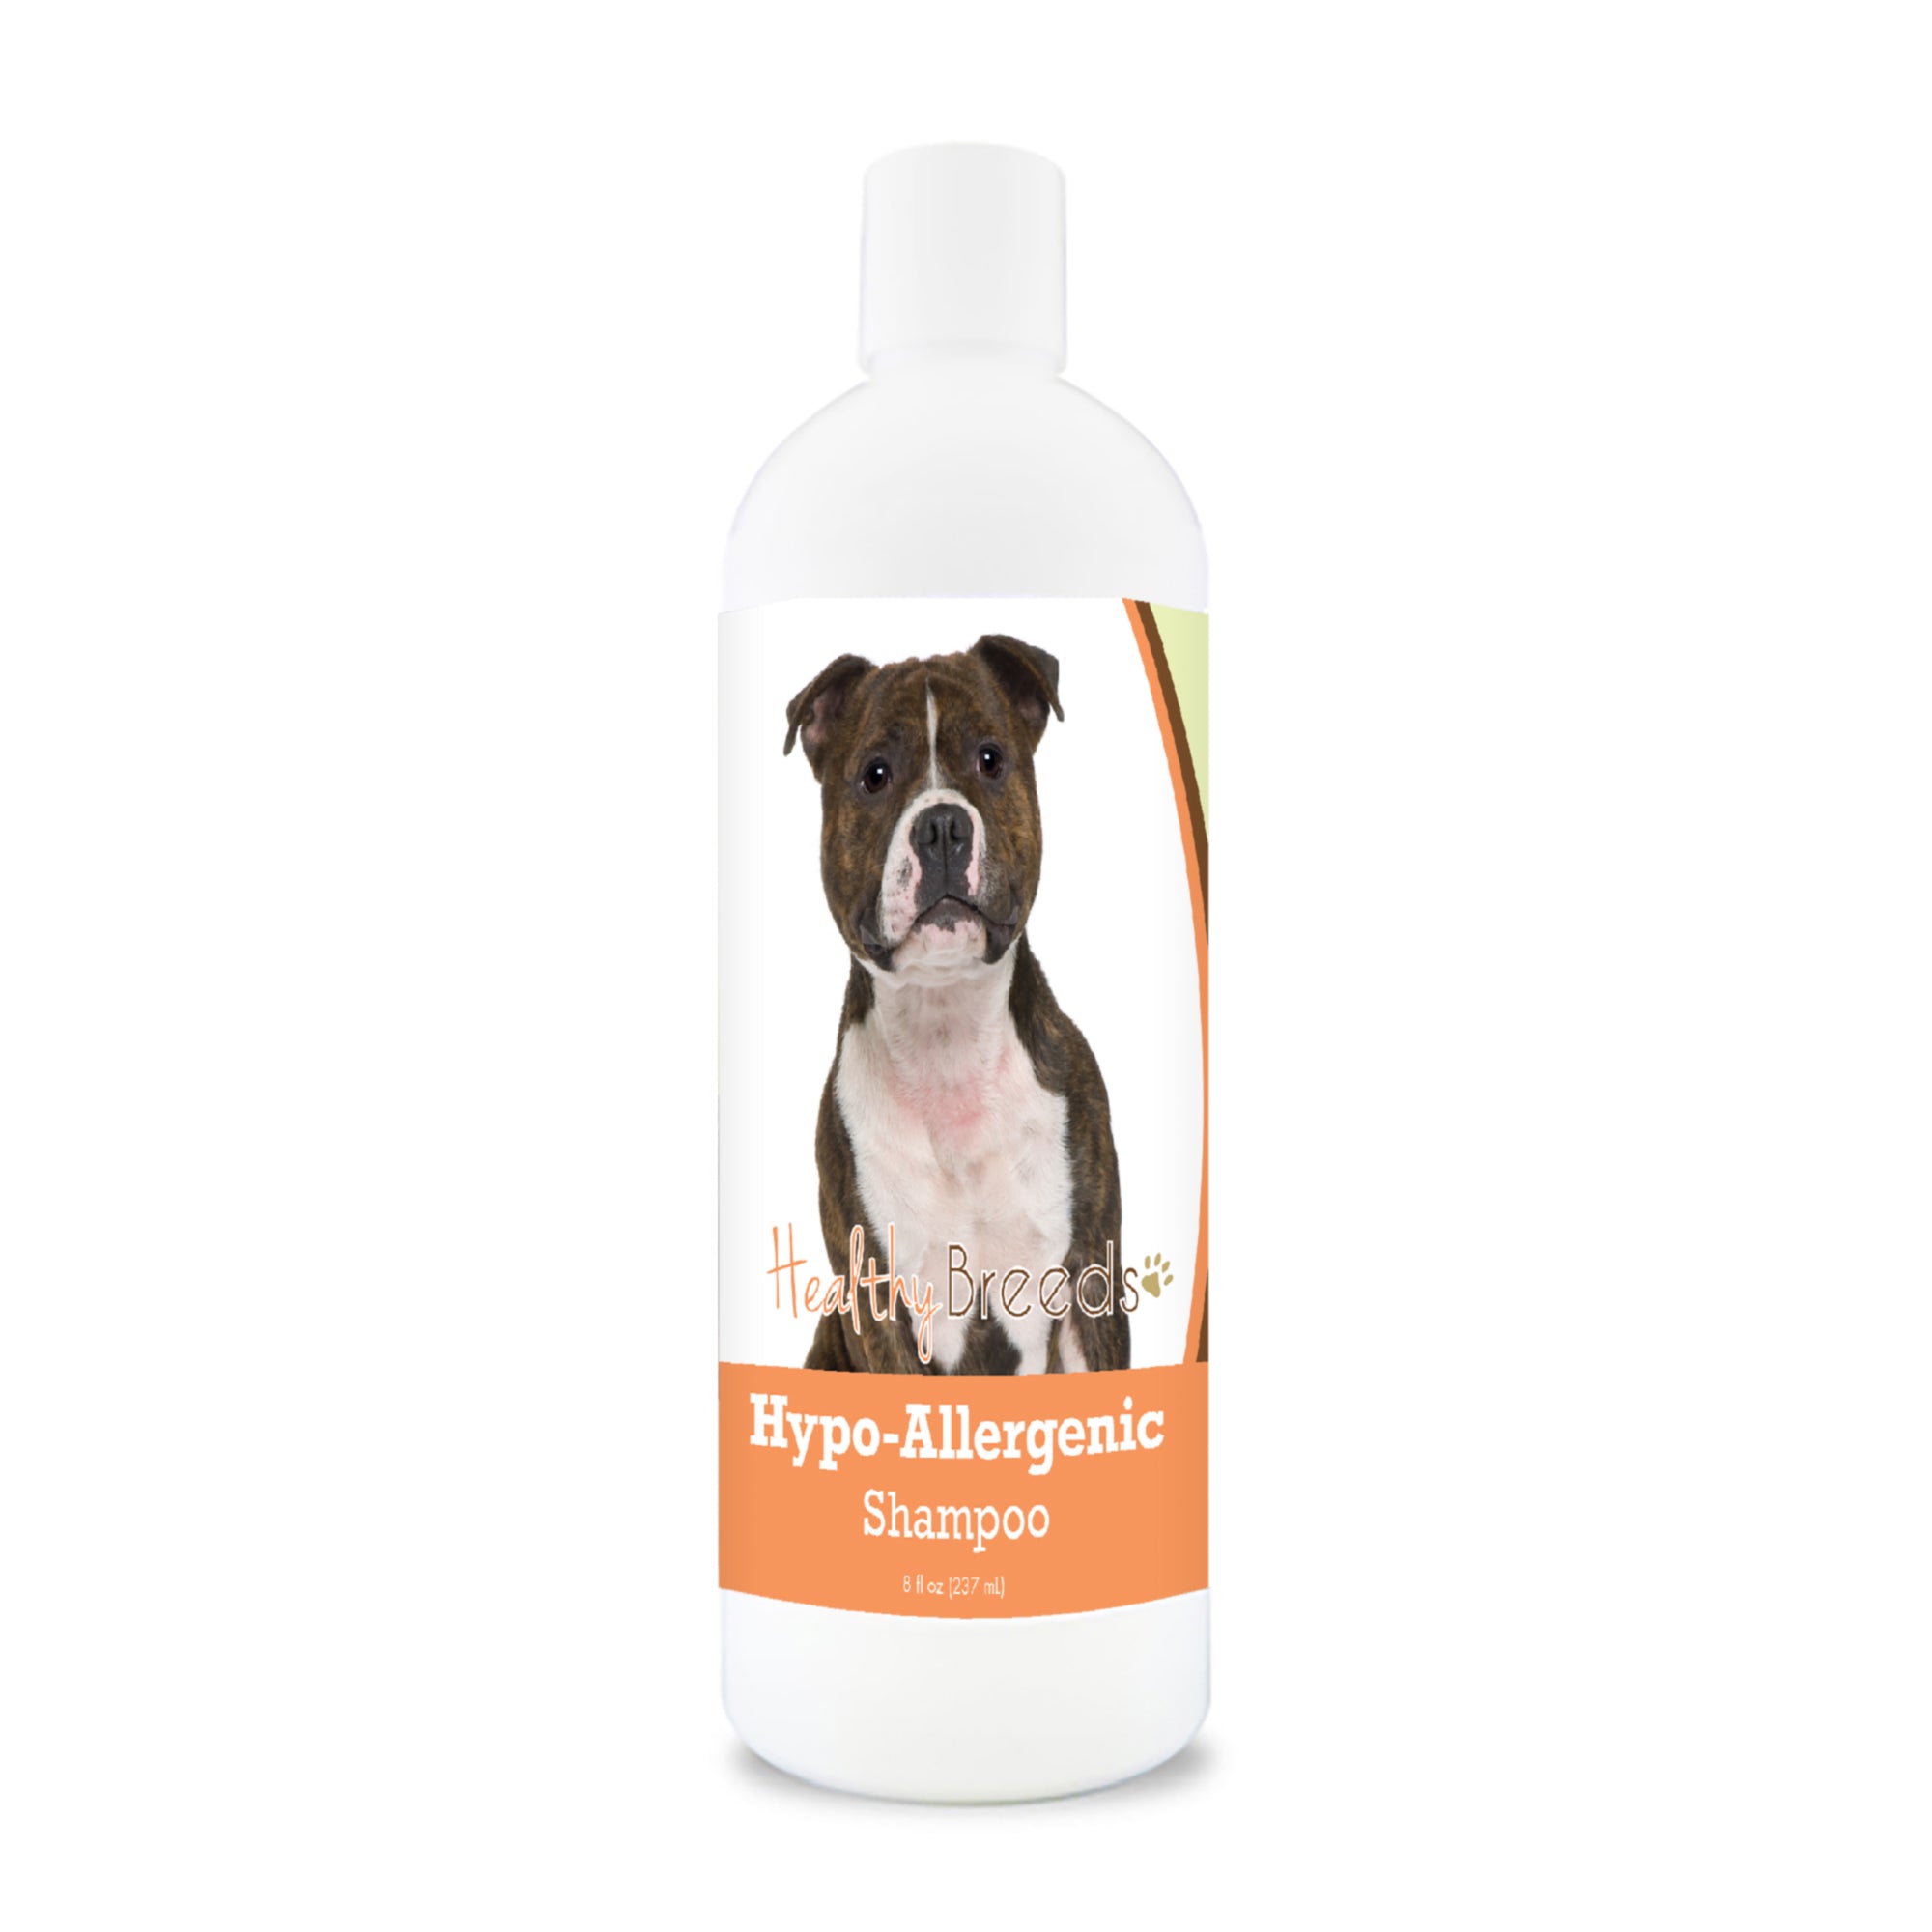 Staffordshire Bull Terrier Hypo-Allergenic Shampoo 8 oz